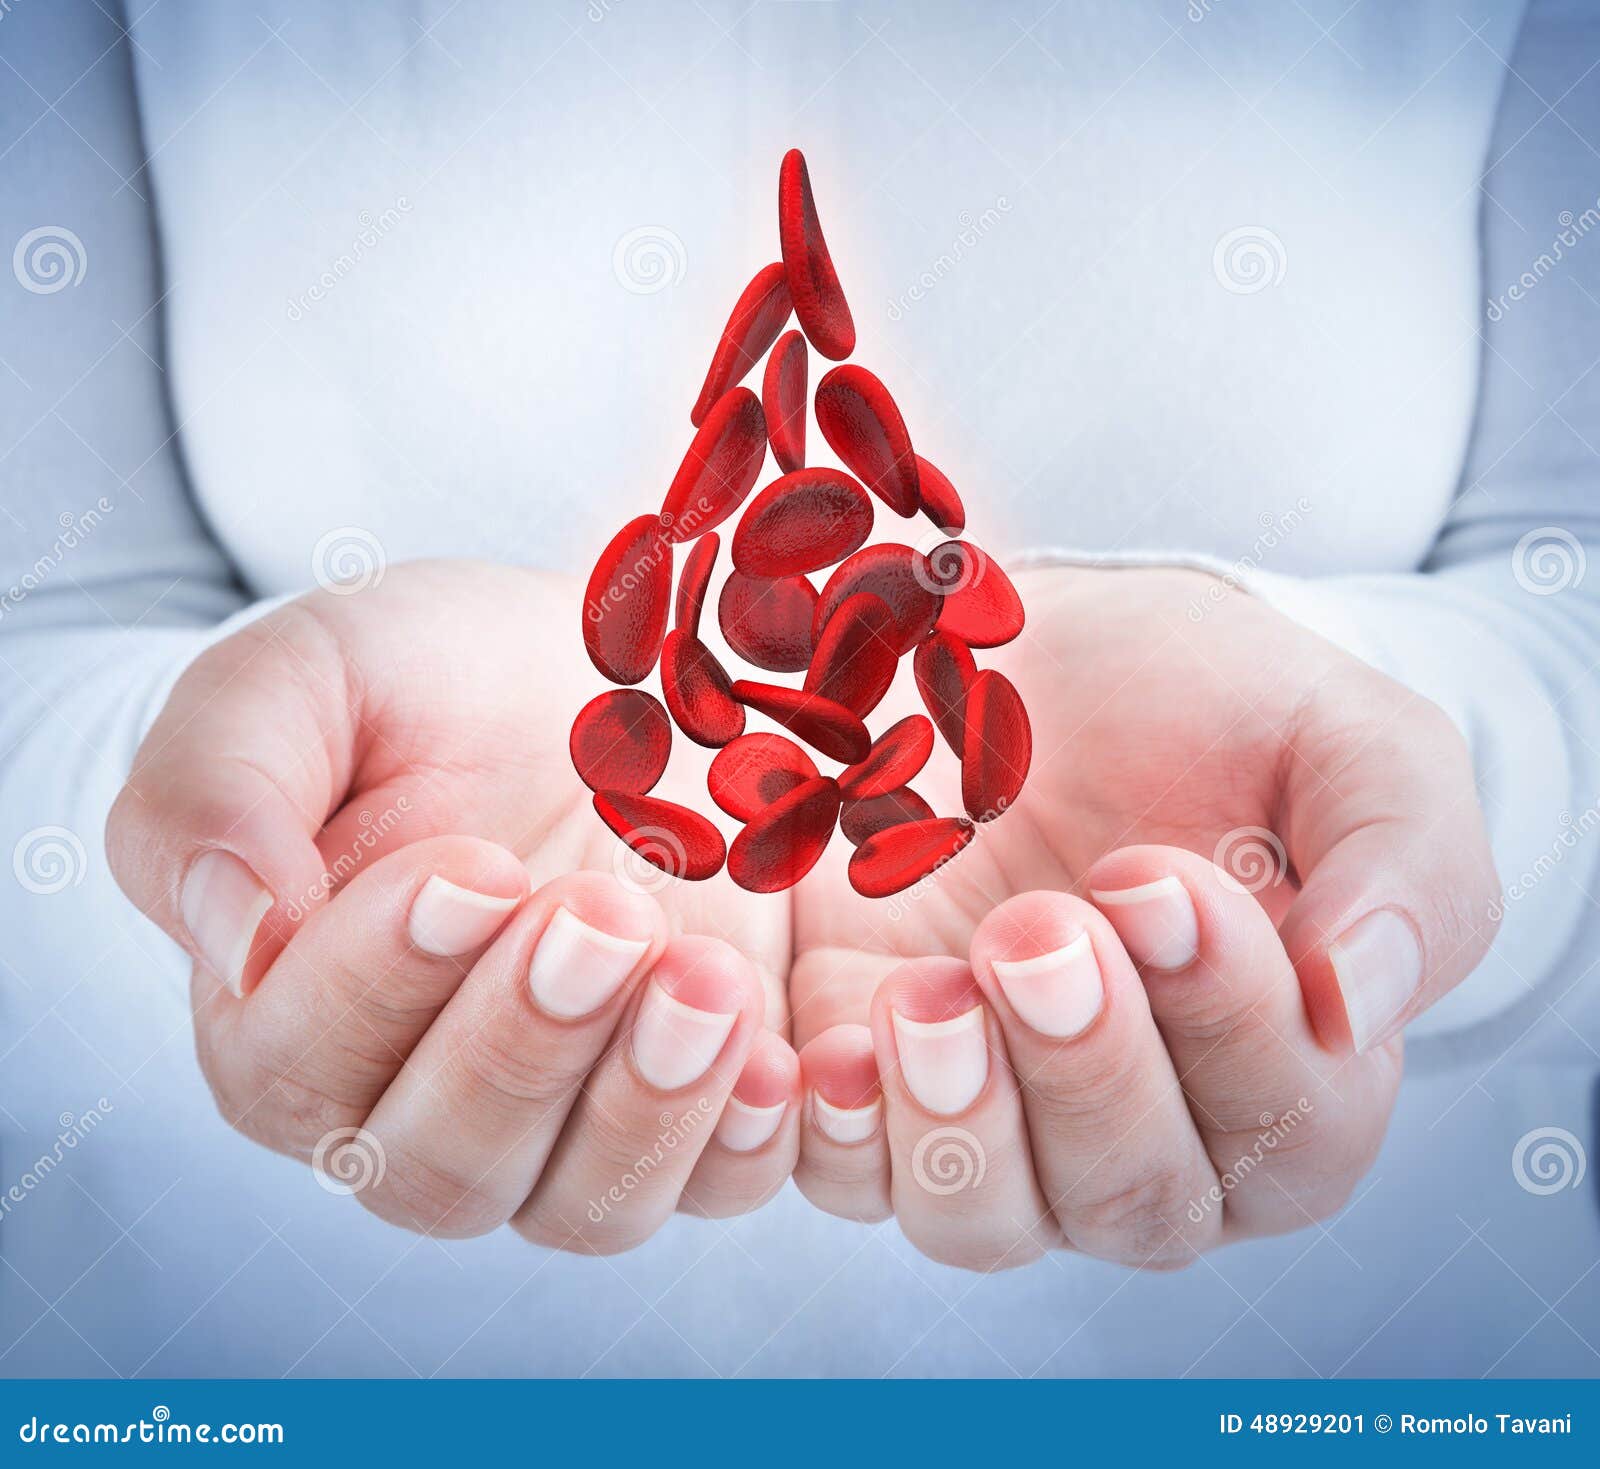 blood cells in hands - d blood drop